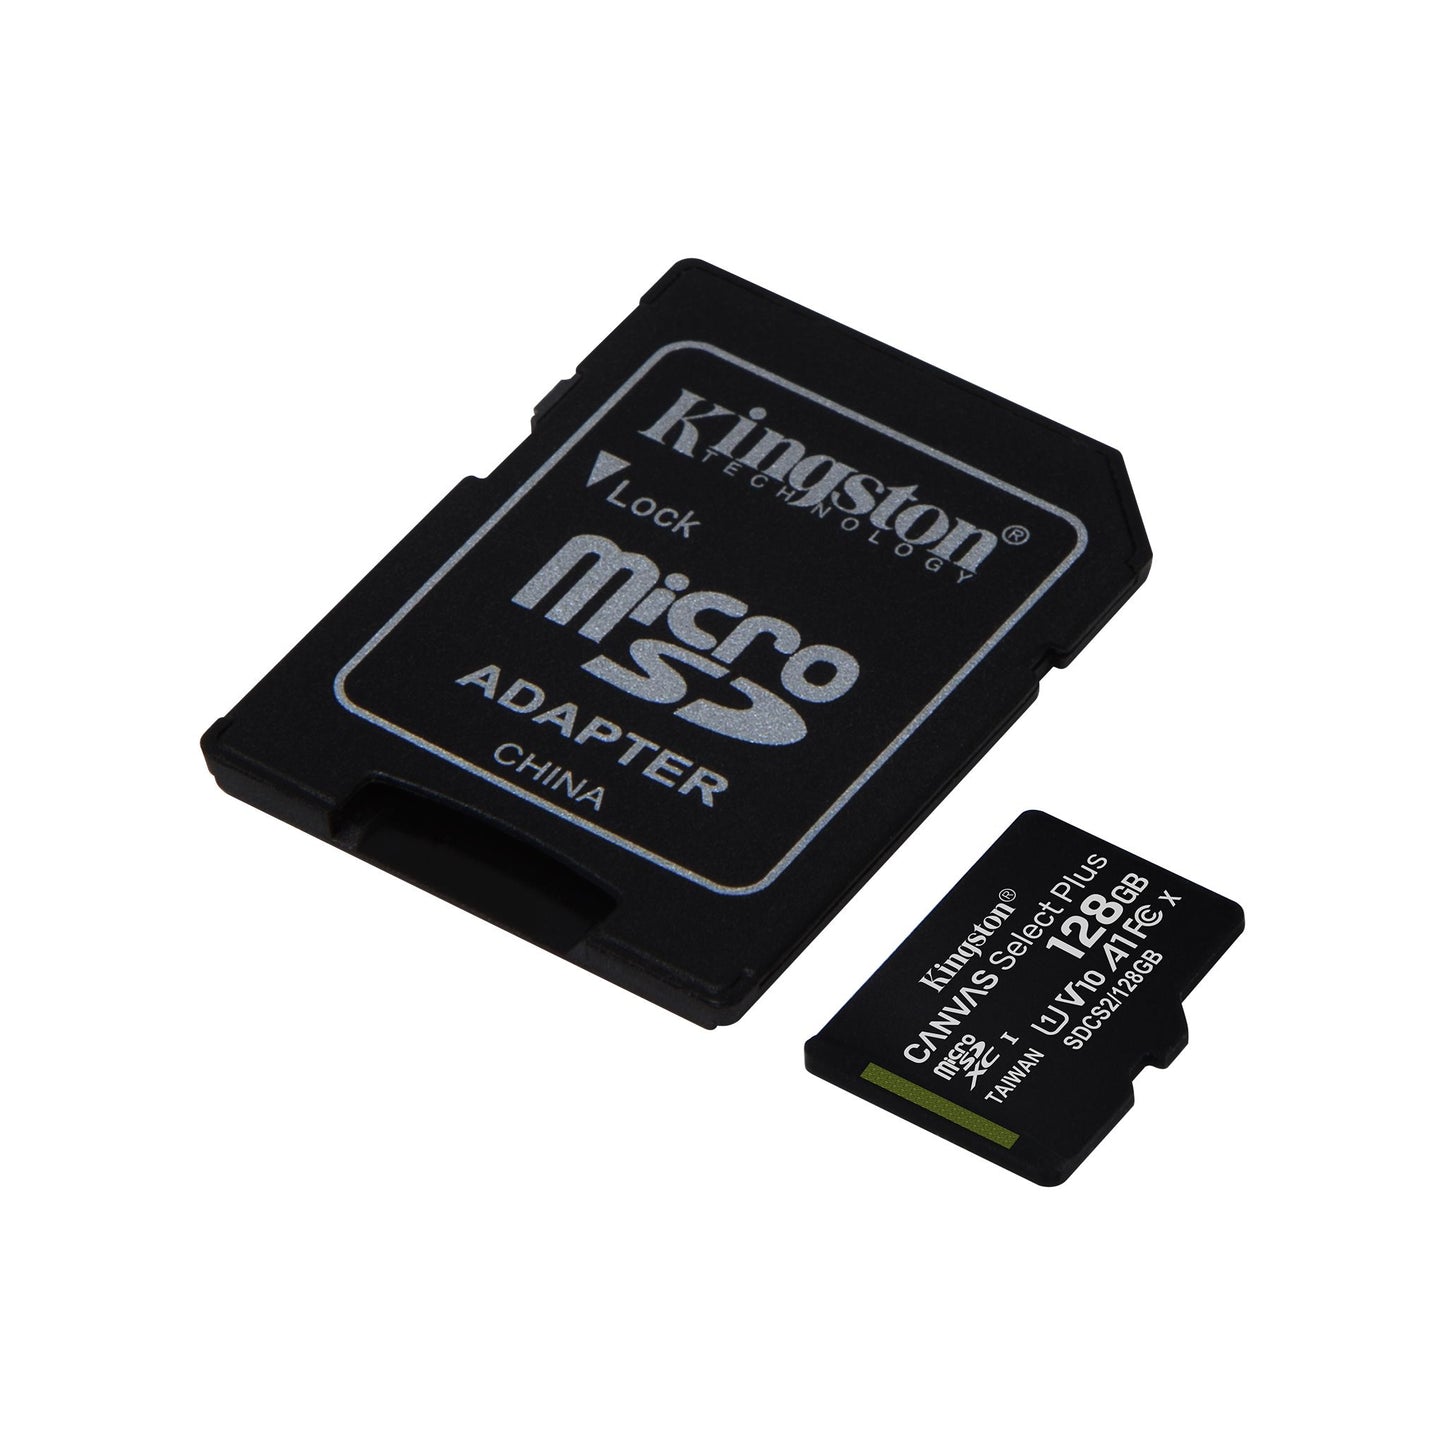 Kingston CANVAS Select Plus 128GB microSDHC Memory Card